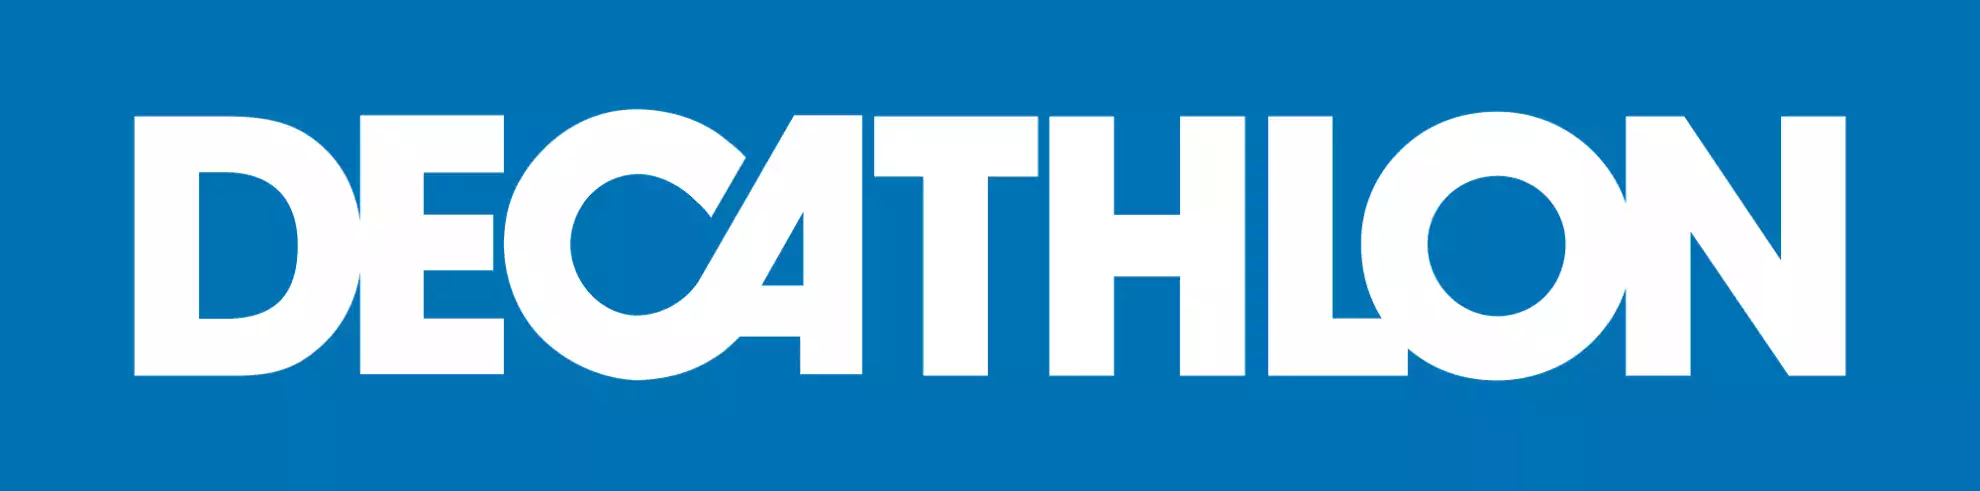 Logo Decathlon bleu sur fond blanc